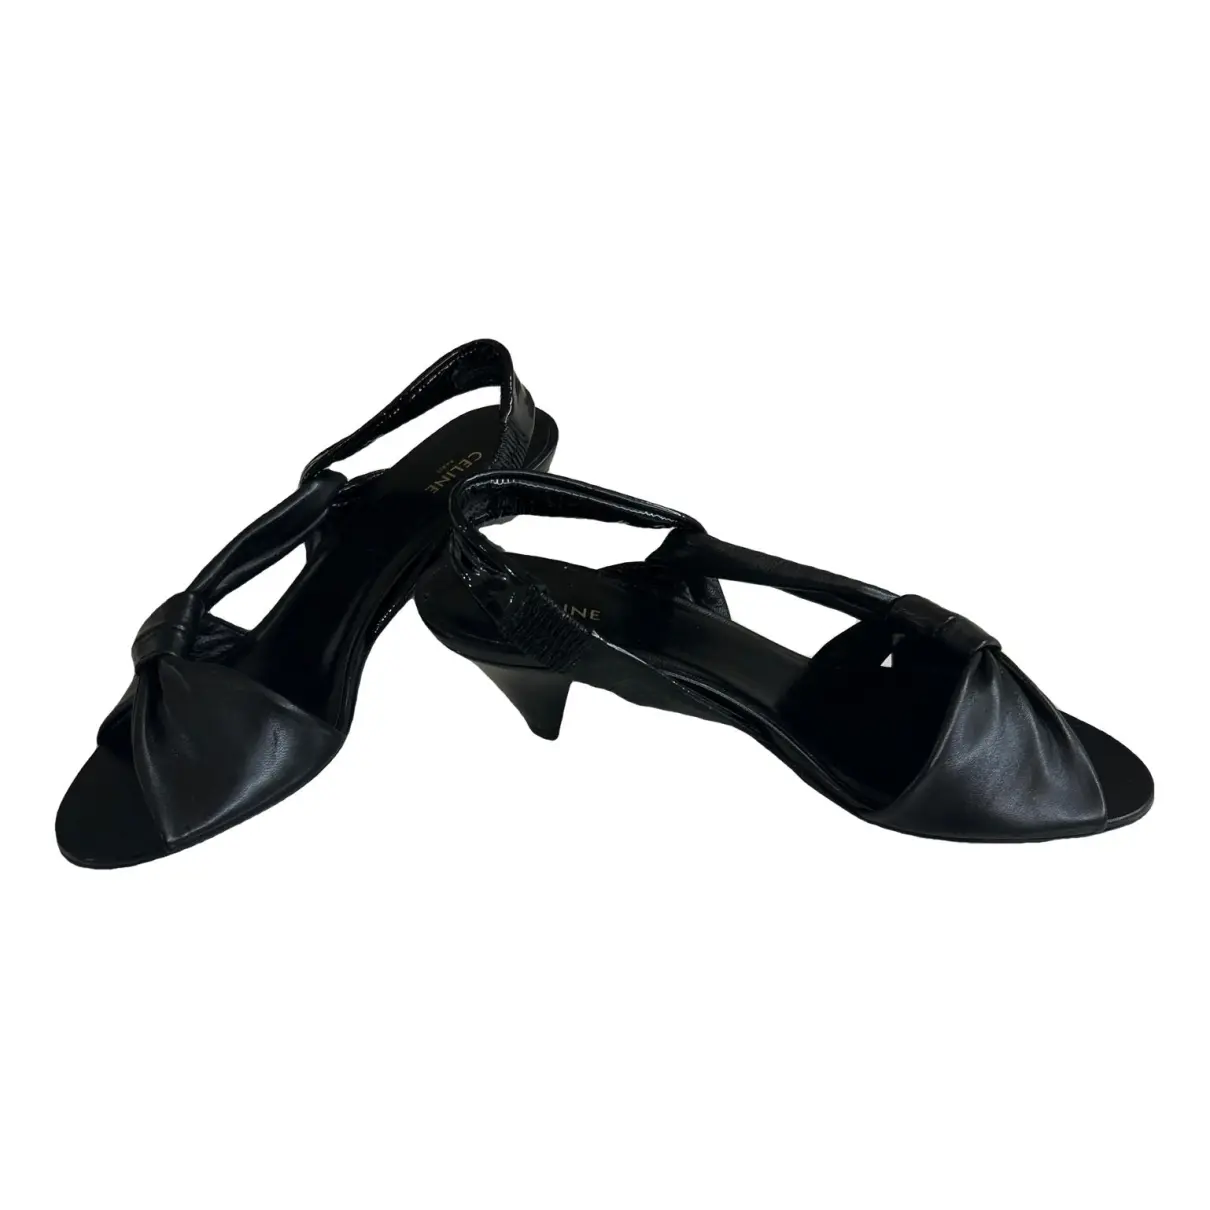 Glove Heel leather sandals